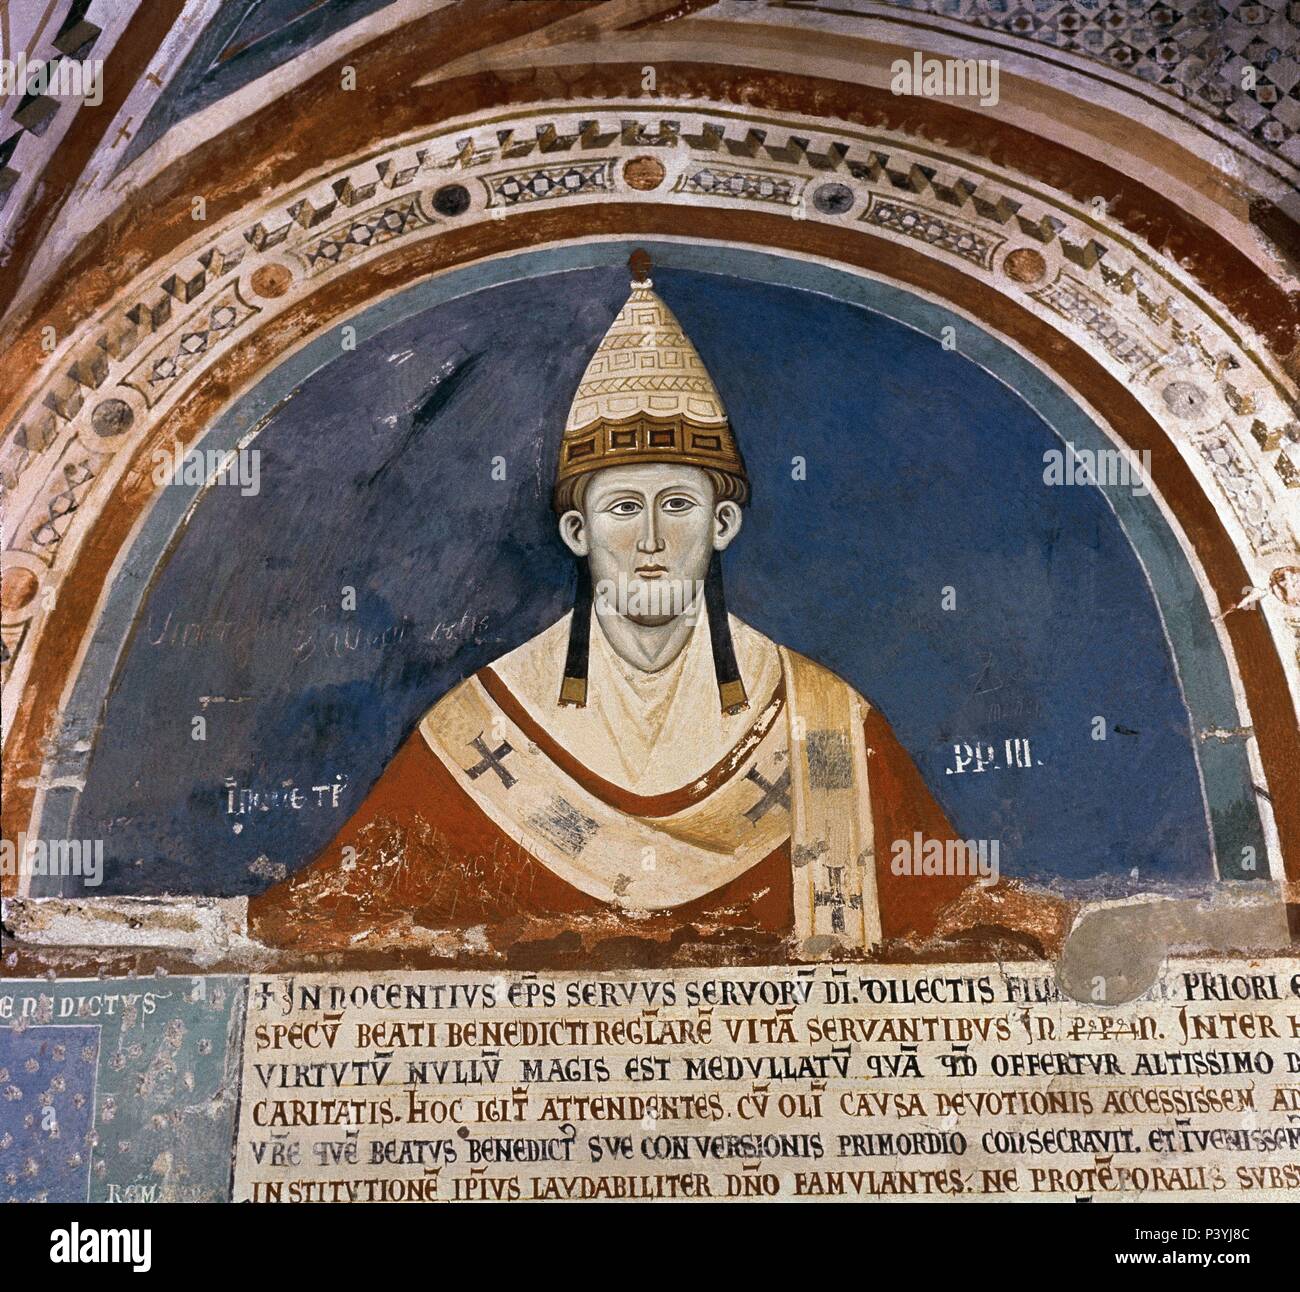 Innocent III (Innocenzo III), Pope from 1198 to 1216. Maestro Conxulu. Pope Innocent III. Fresco from the second half of the 13th century. Subiaco, Church of the Sacro Speco. Italy. Author: MAESTRO CONXULU. Location: IGLESIA DEL SACRO SPECO, SUBIACO, ITALIA. Stock Photo